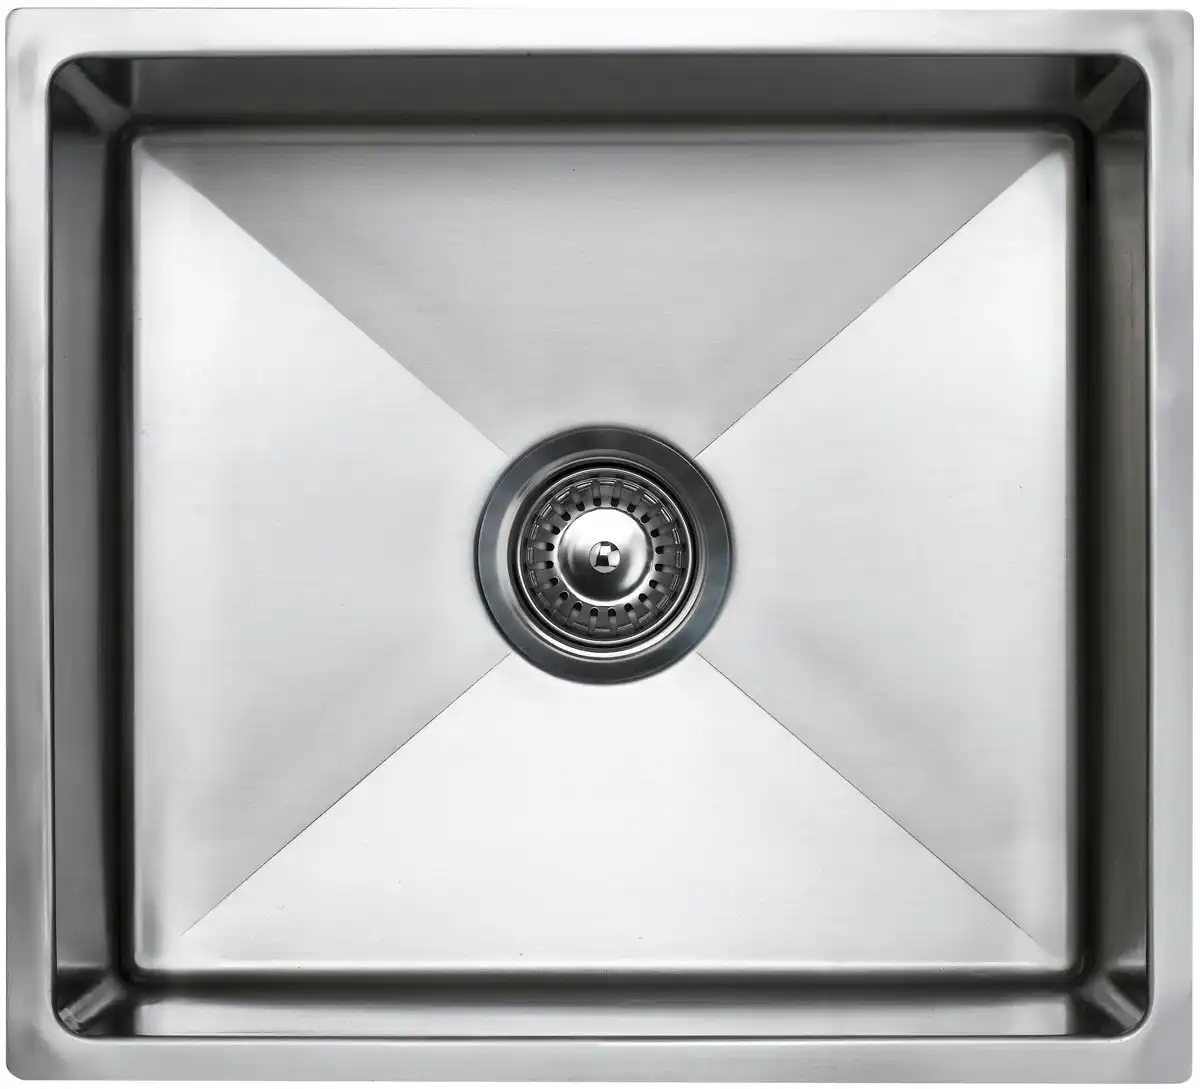 Arc Deluxe Single Bowl Undermount Sink